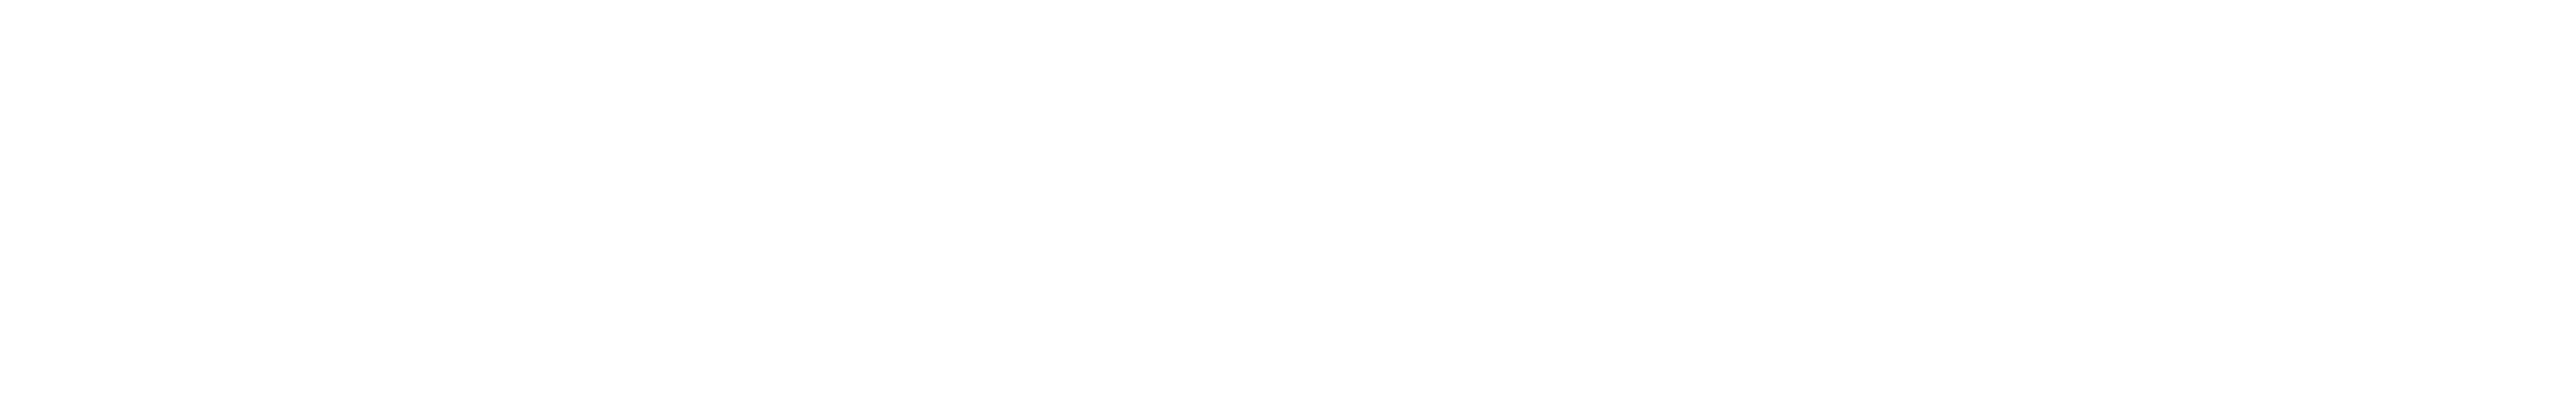 Emory Law logo